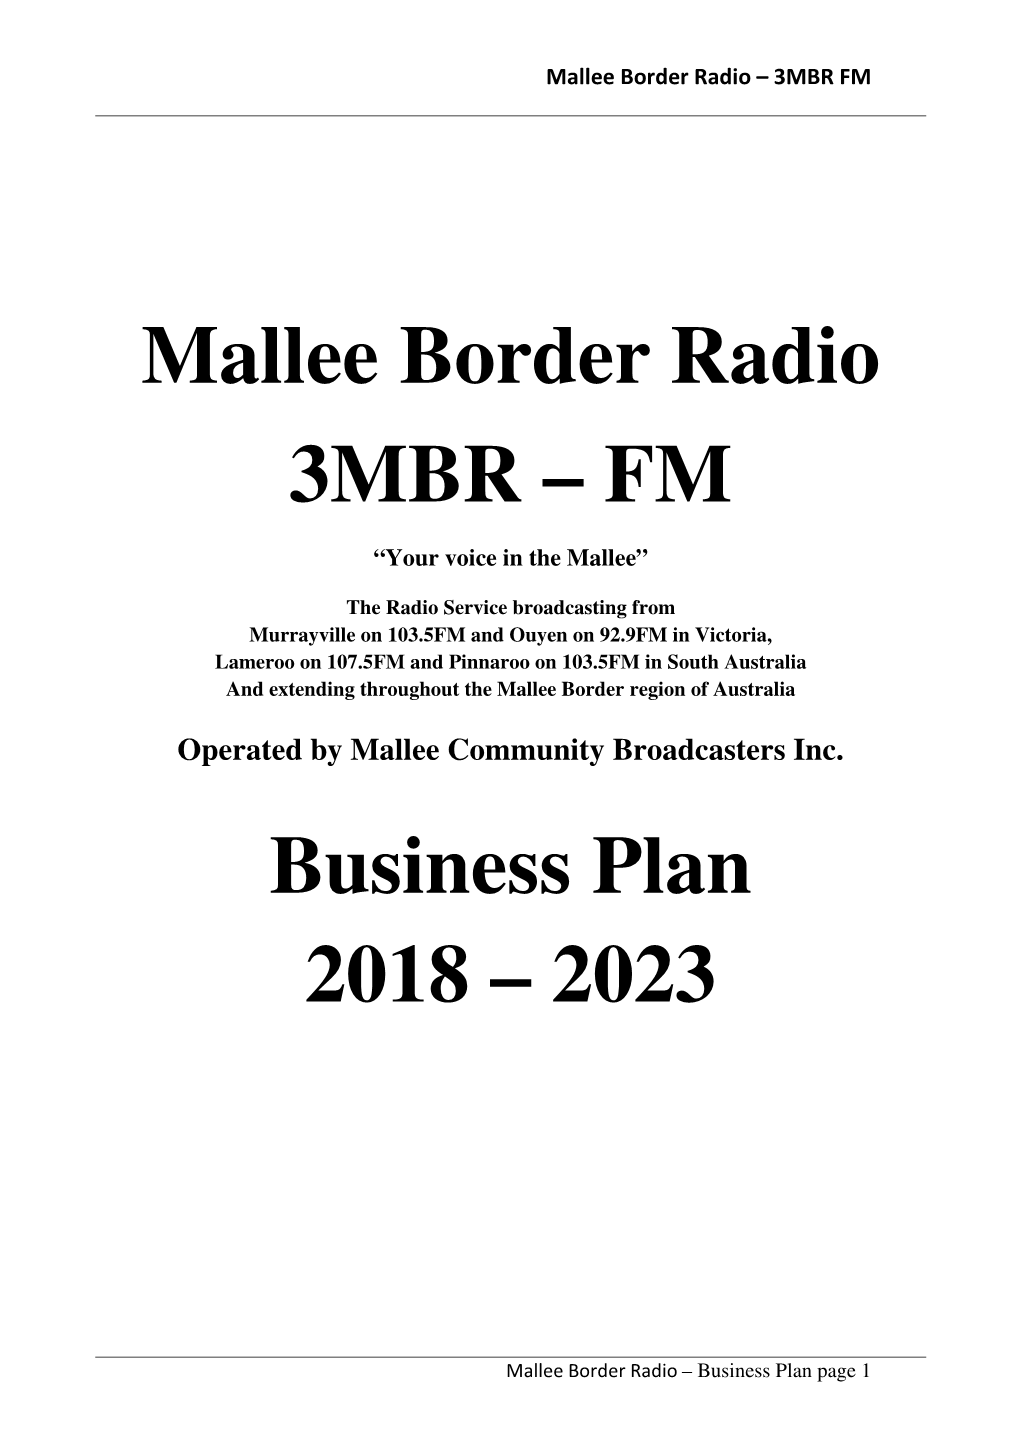 Mallee Border Radio 3MBR – FM Business Plan 2018 – 2023